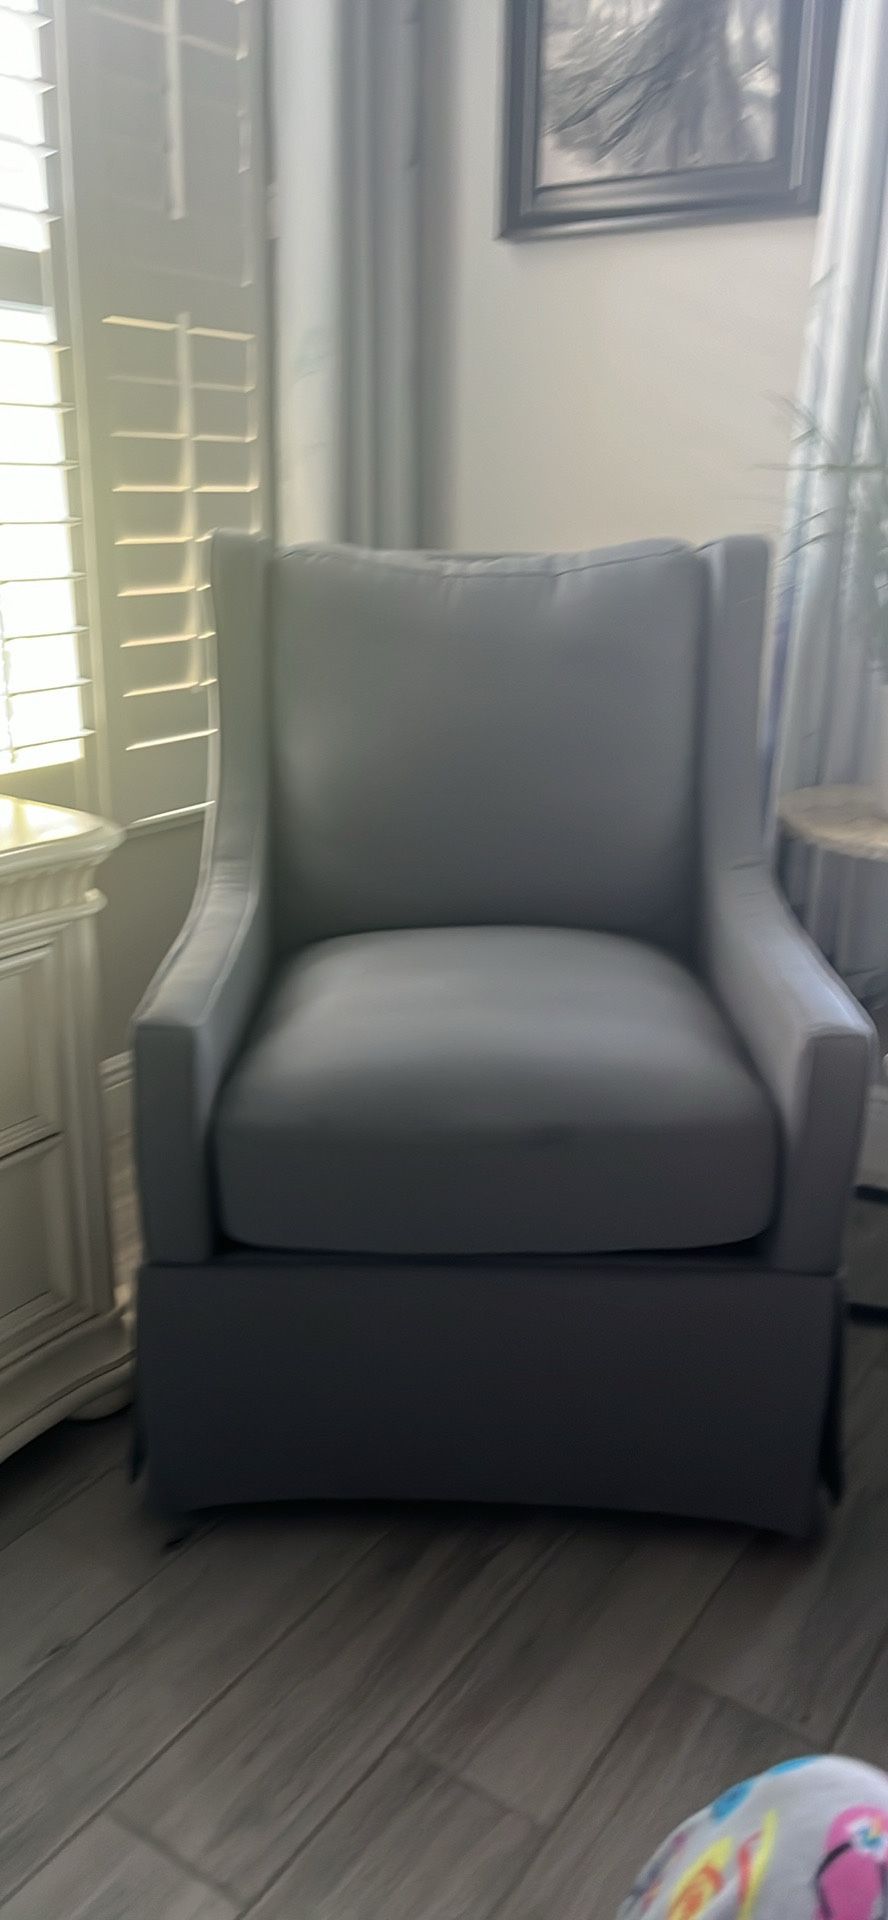 Grey Swivel Chair 